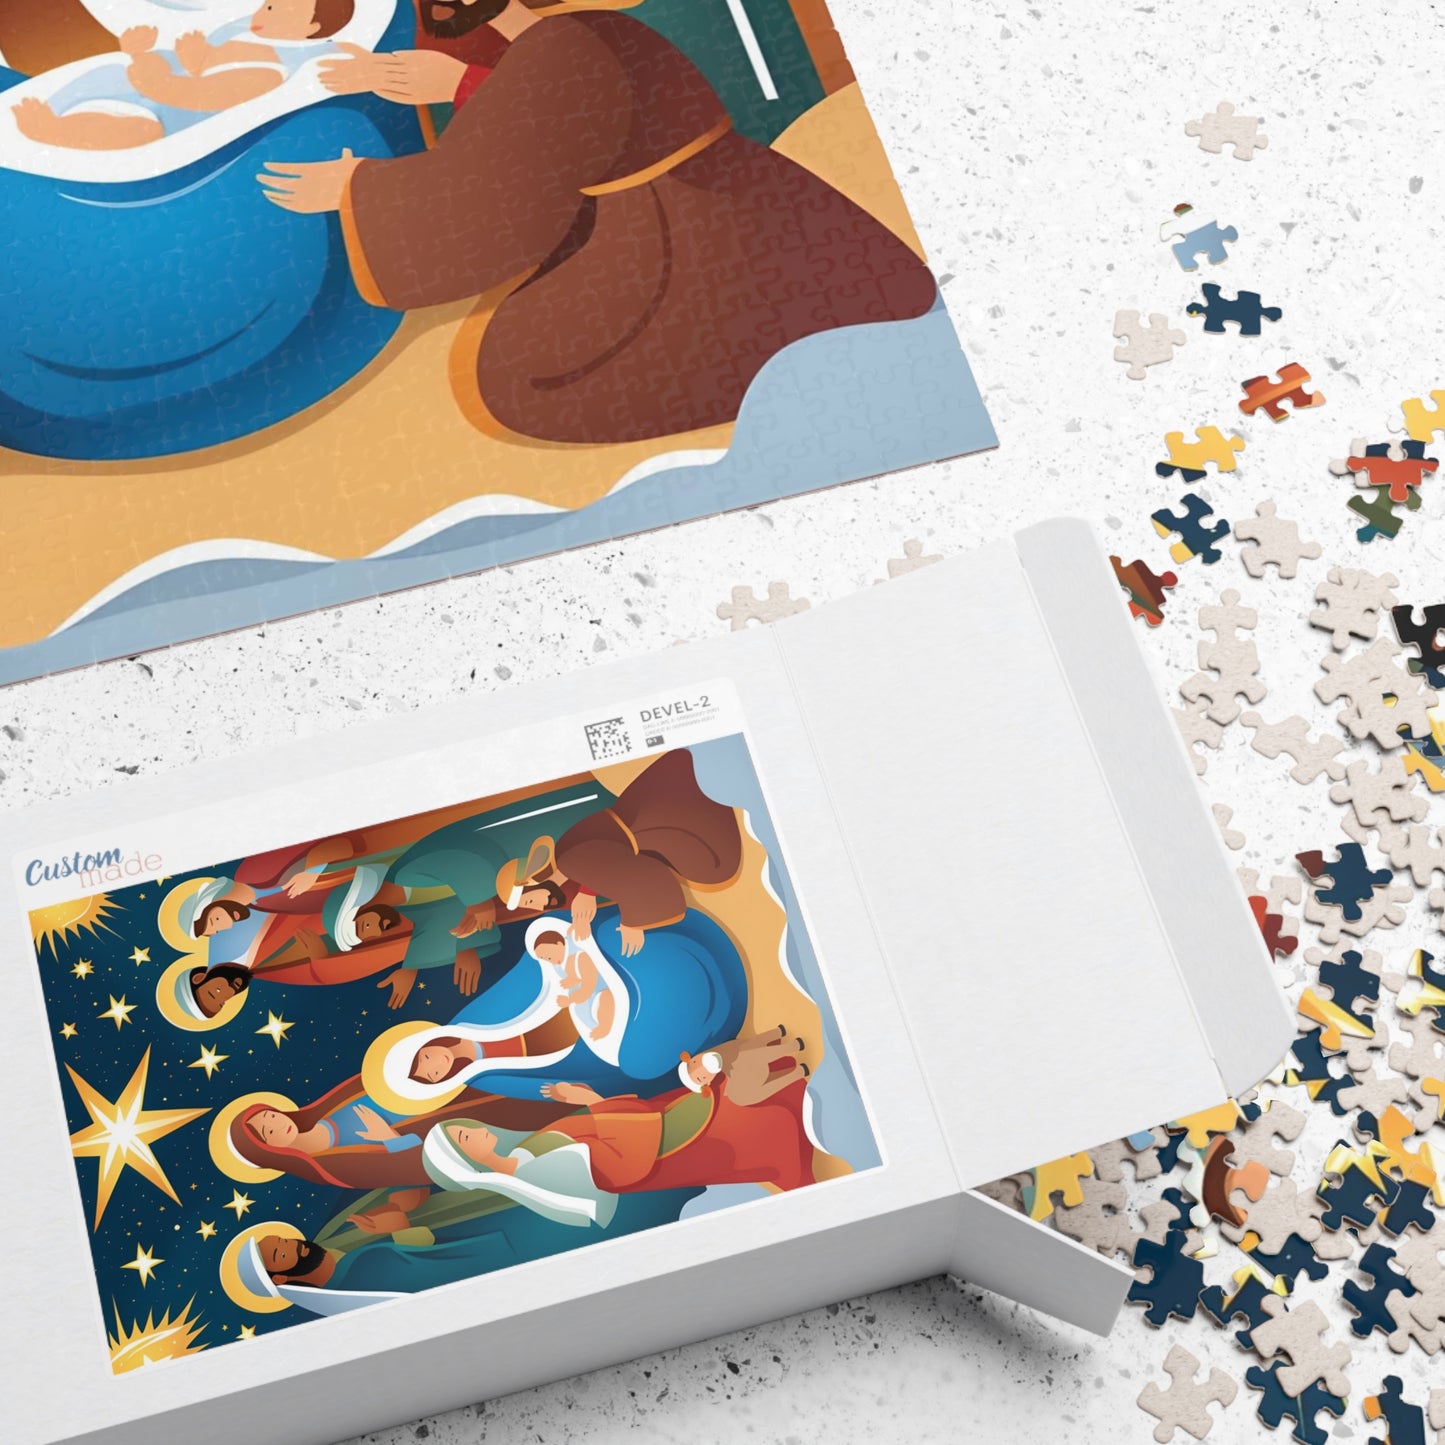 Christmas Nativity Puzzle (110, 252, 500, 1014-piece)